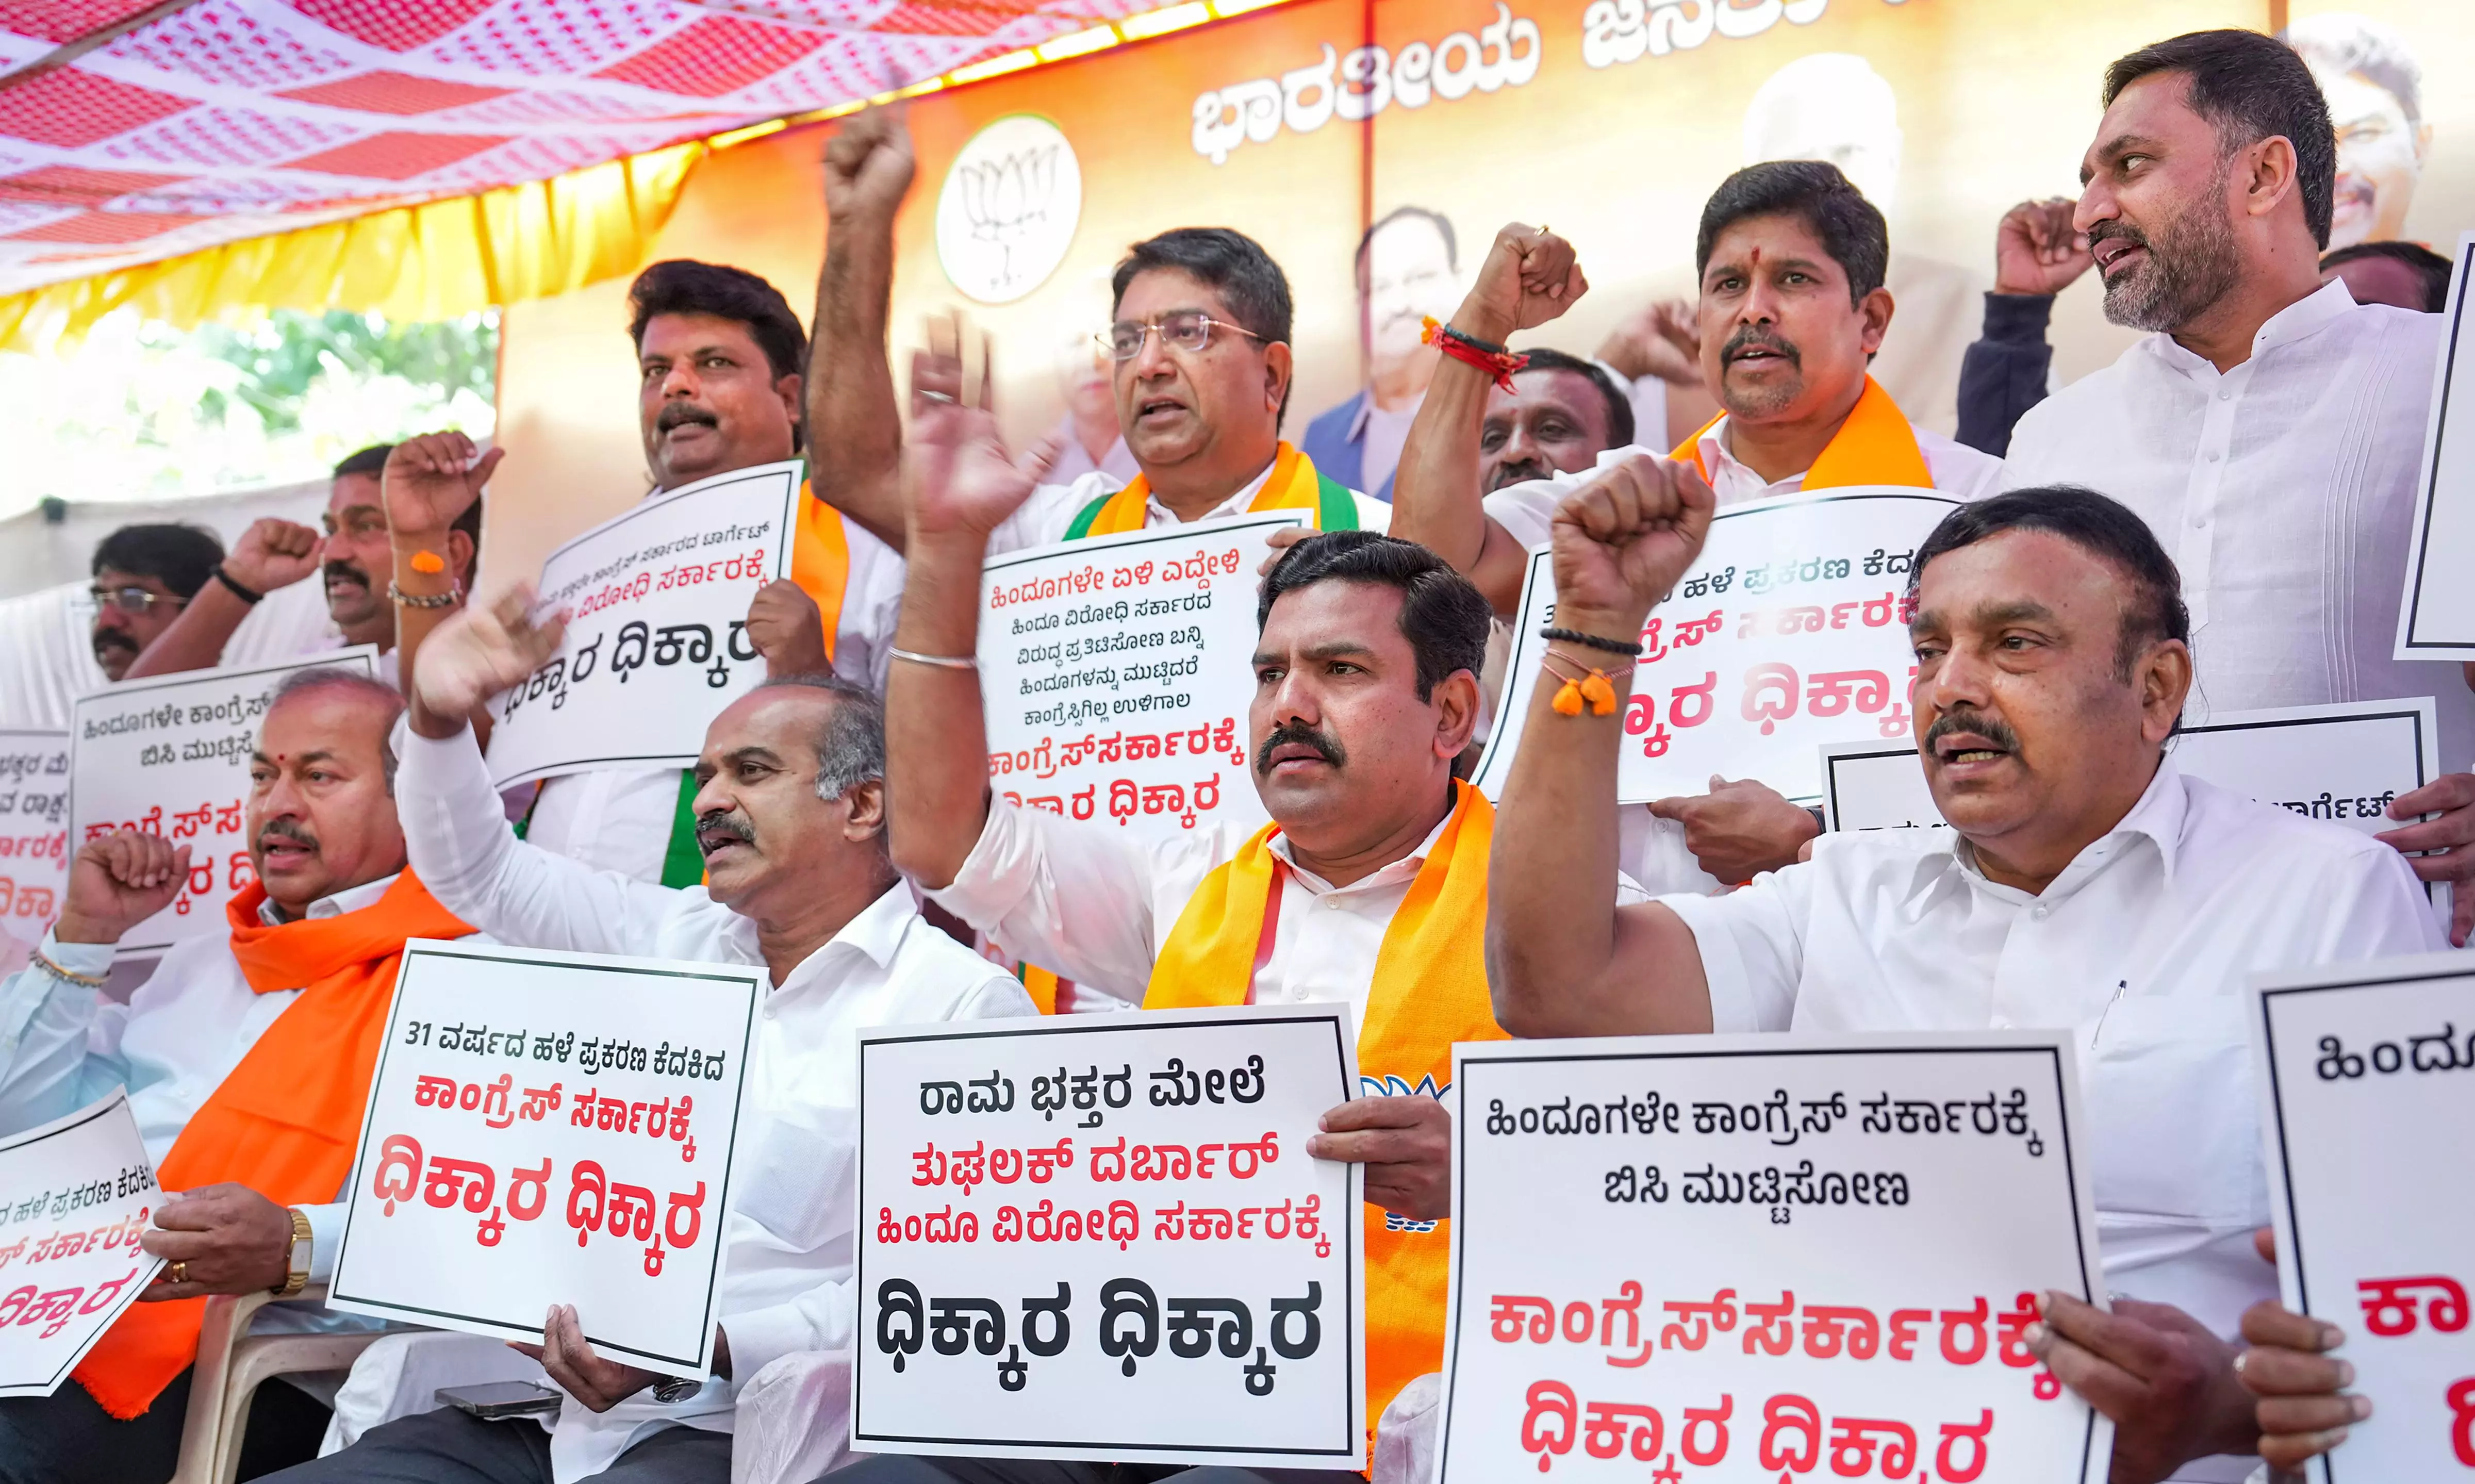 Karnataka | Arrest of Hindu activists in 1992 Babri Masjid case sparks rage